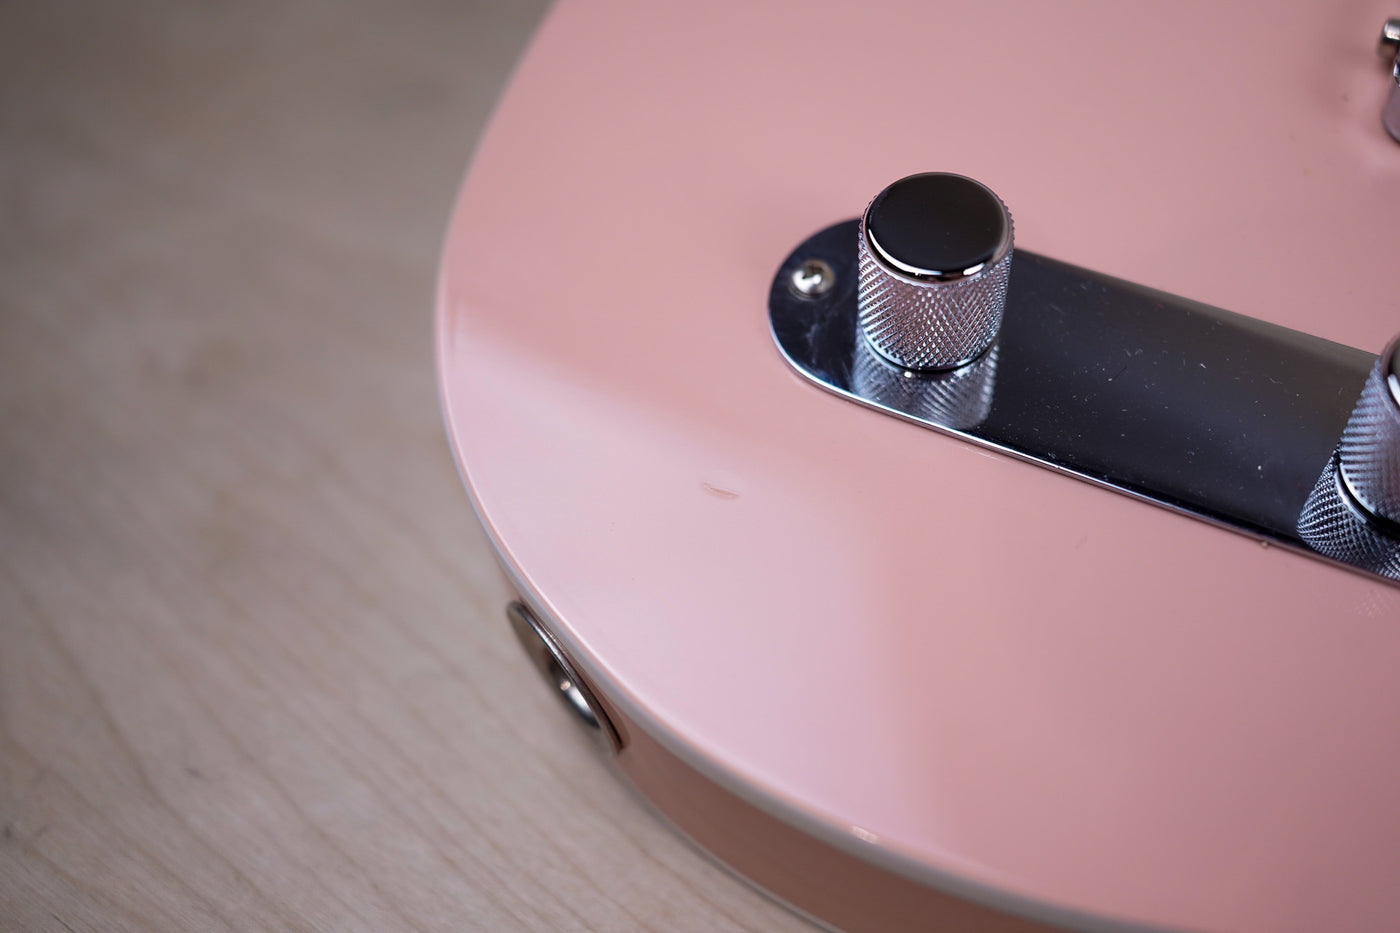 Fender American Original '60s Custom Telecaster 2019 Shell Pink Refinish w/ Hard Case